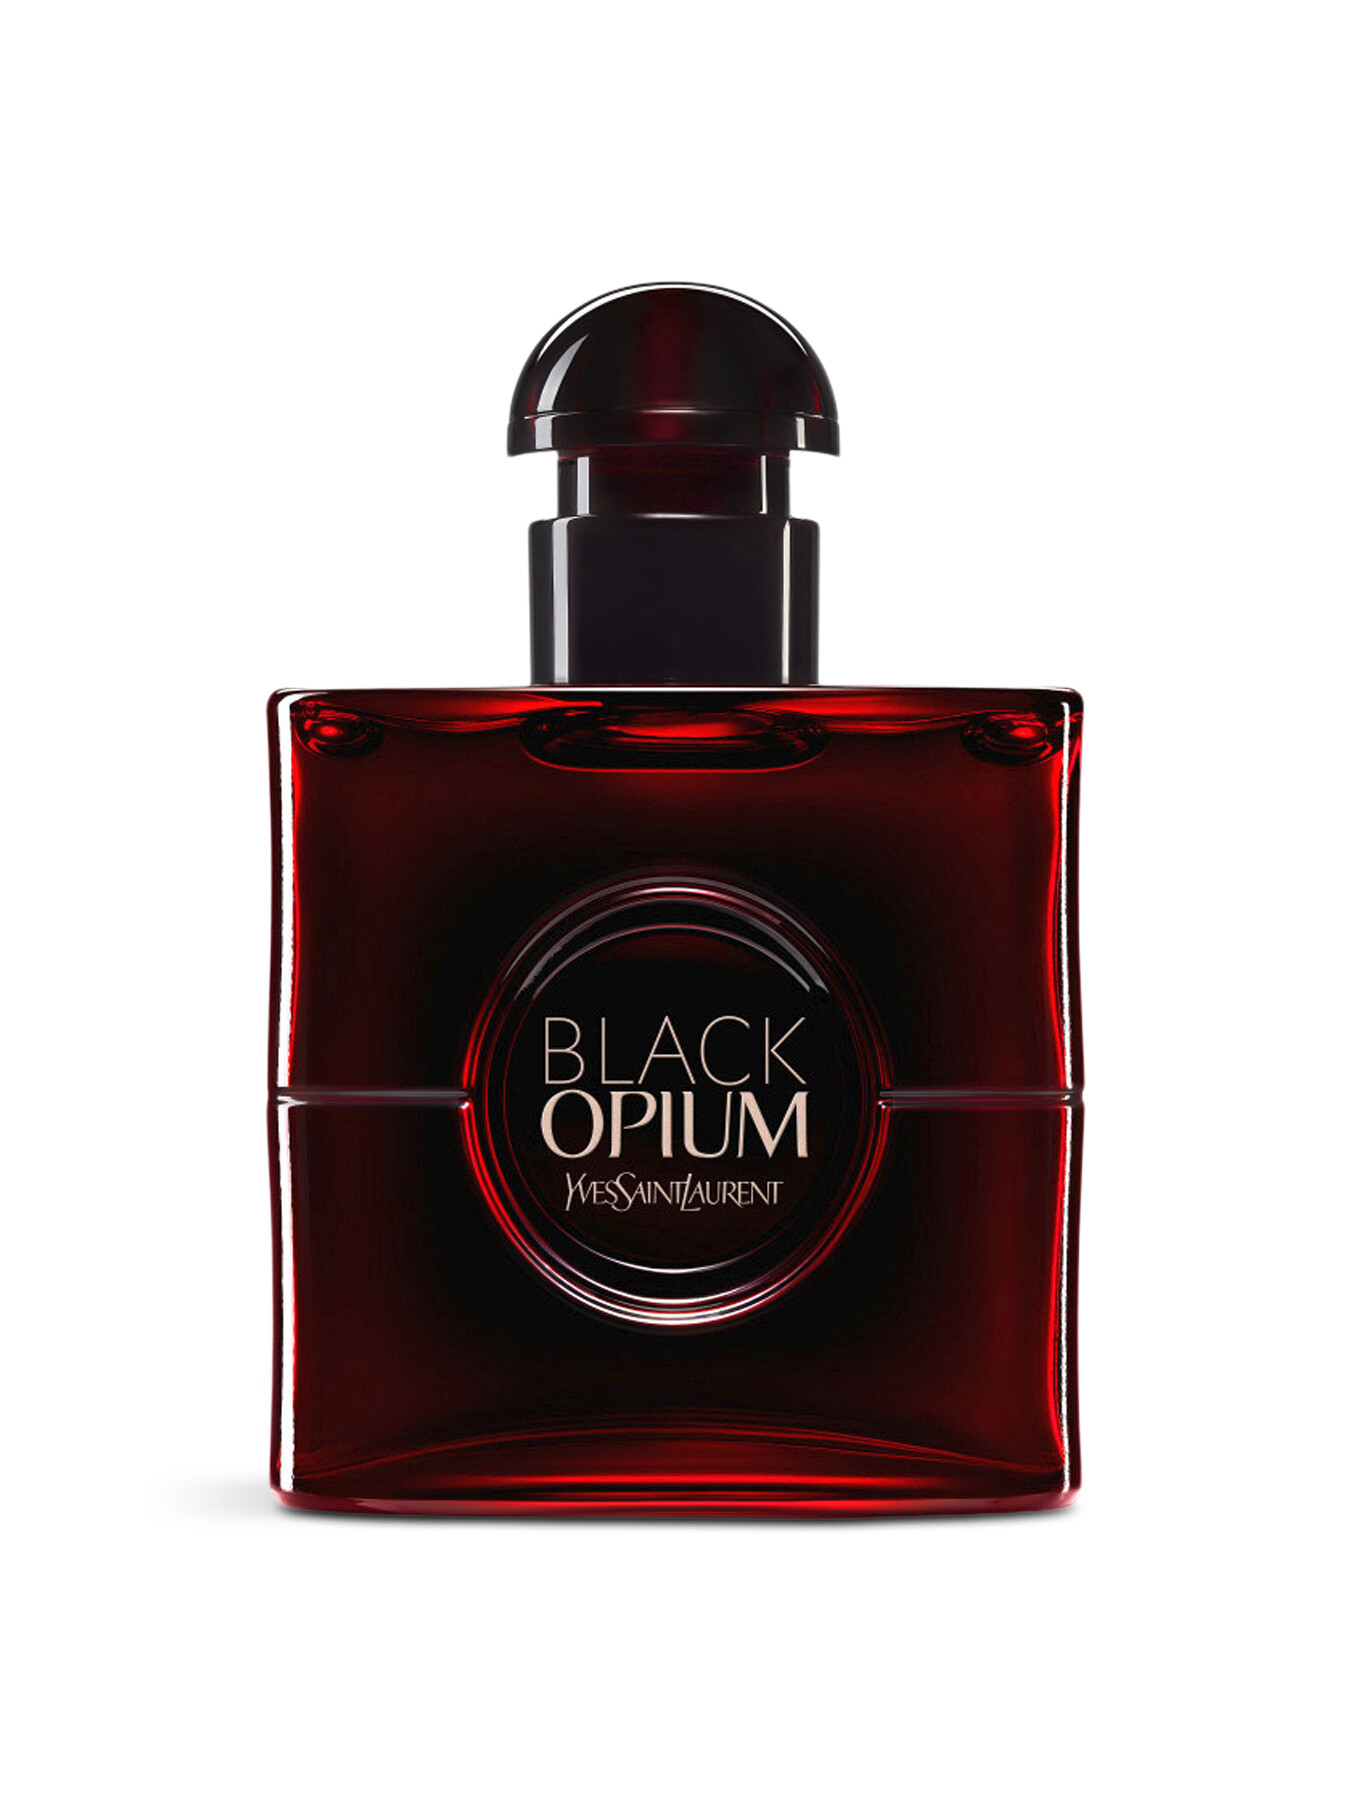 Ysl Black Opium Over Red Eau De Parfum 30ml In White